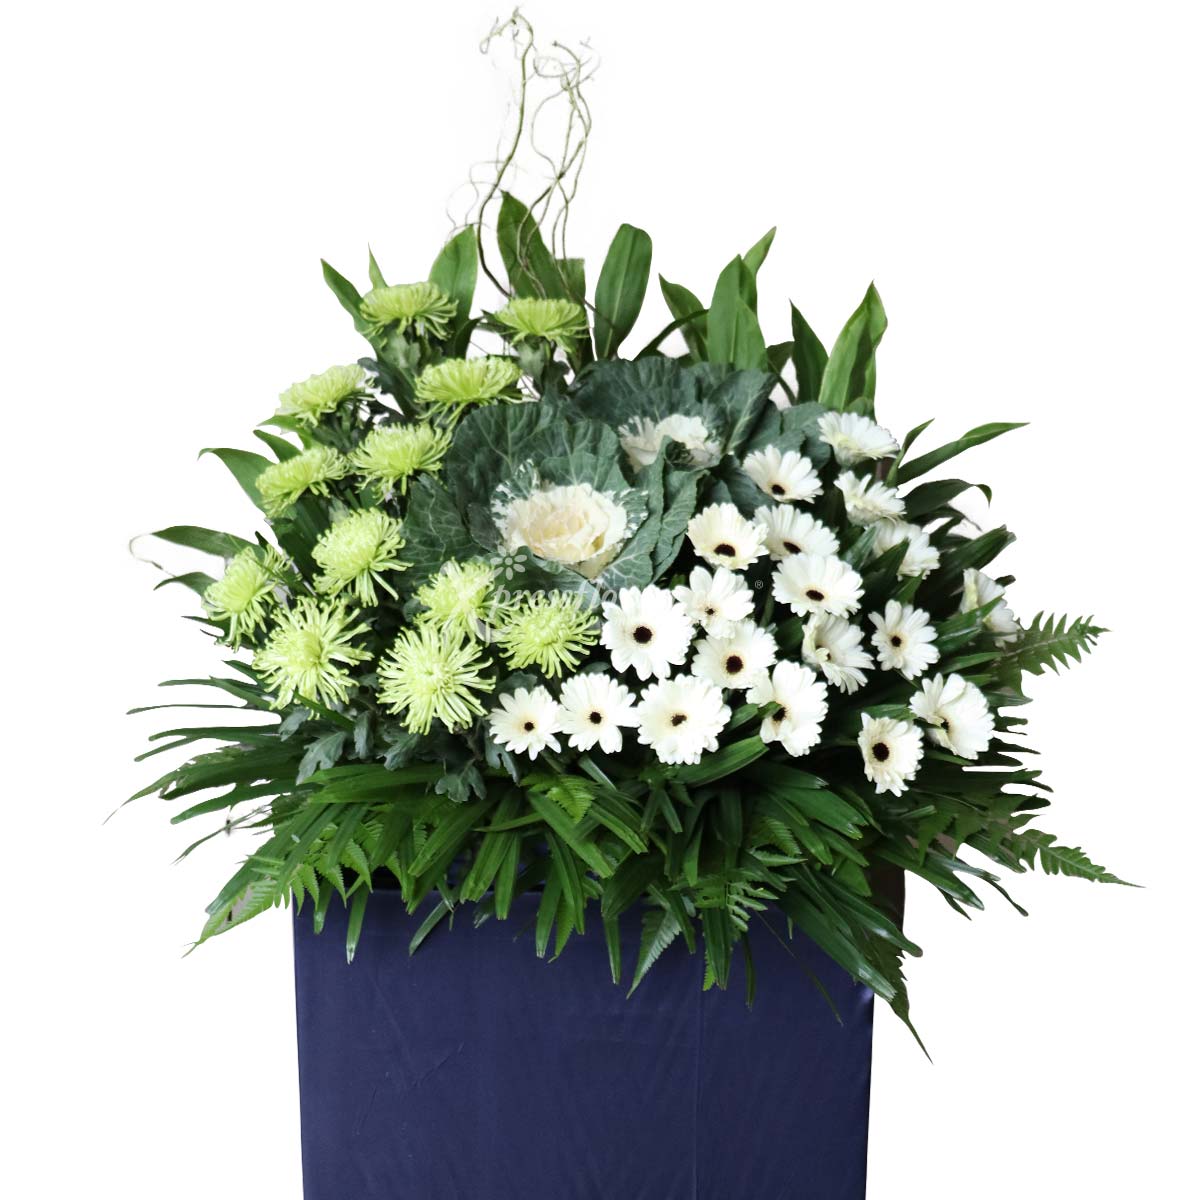 Longing Peace (Funeral Condolence Flower Wreath)